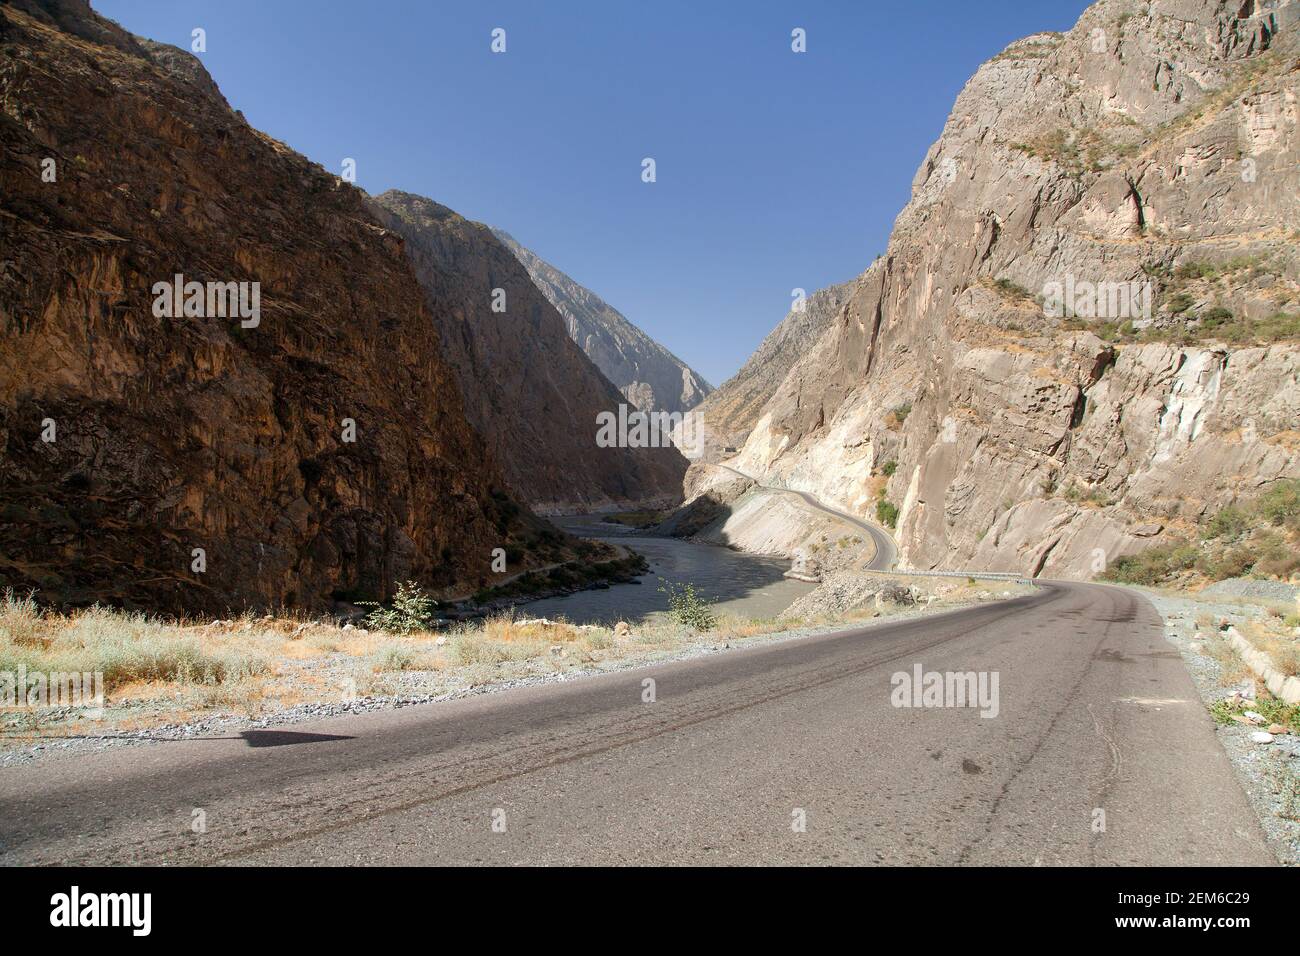 Autostrada Pamir M41 strada internazionale o pamirskij trakt. Fiume Panj e monti Pamir. Panj è la parte superiore del fiume Amu Darya. Vista panoramica.Tajikis Foto Stock